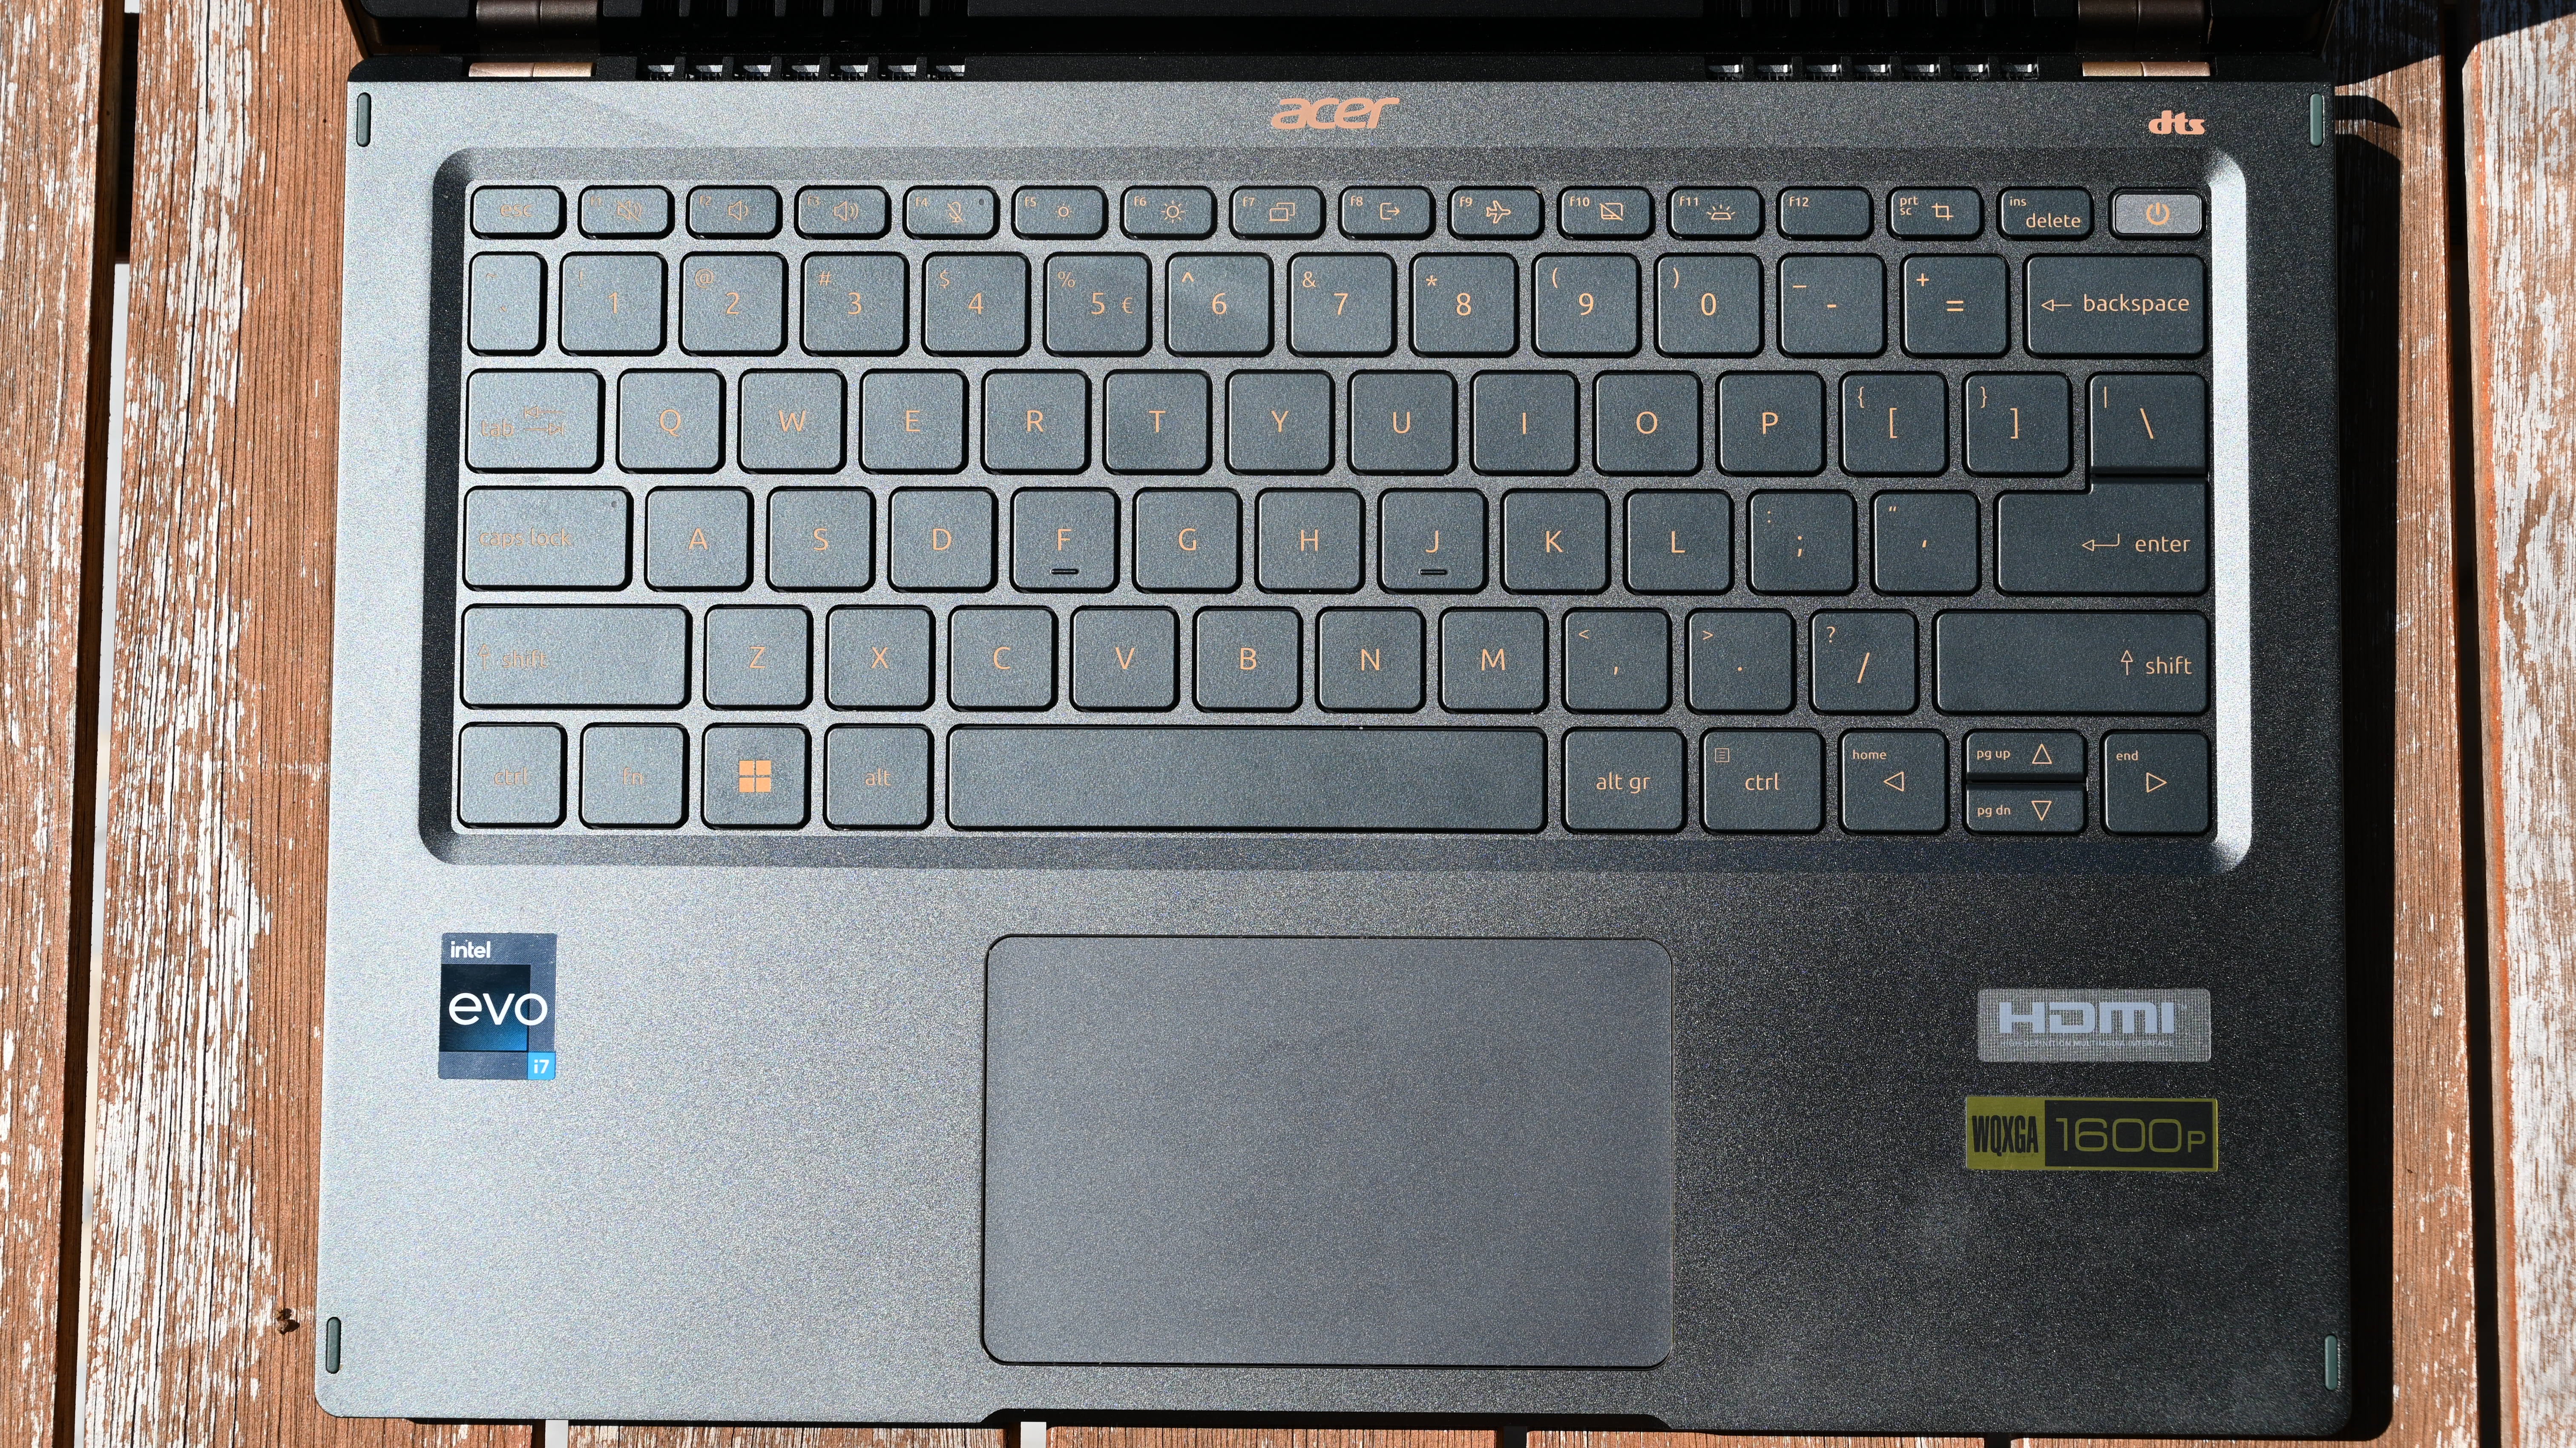 Acer Swift 5 (Photo: Phillip Tracy/Gizmodo)